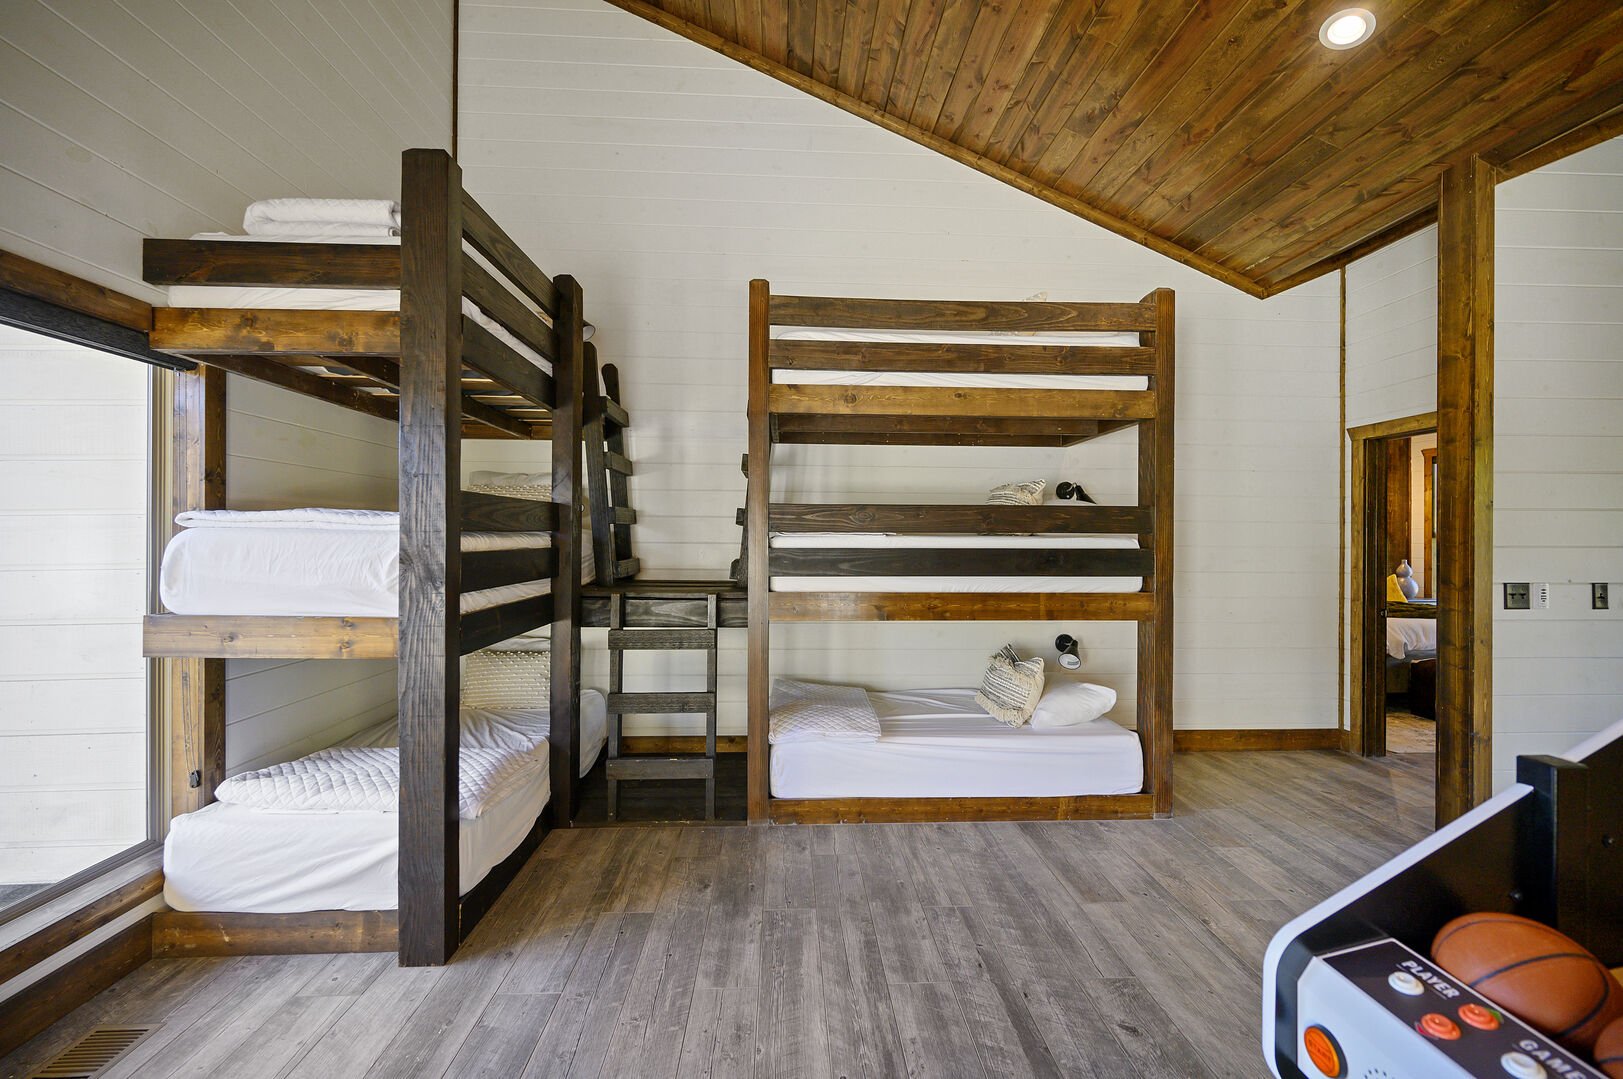 (2) 3 bed bunk area (sleeps 6)